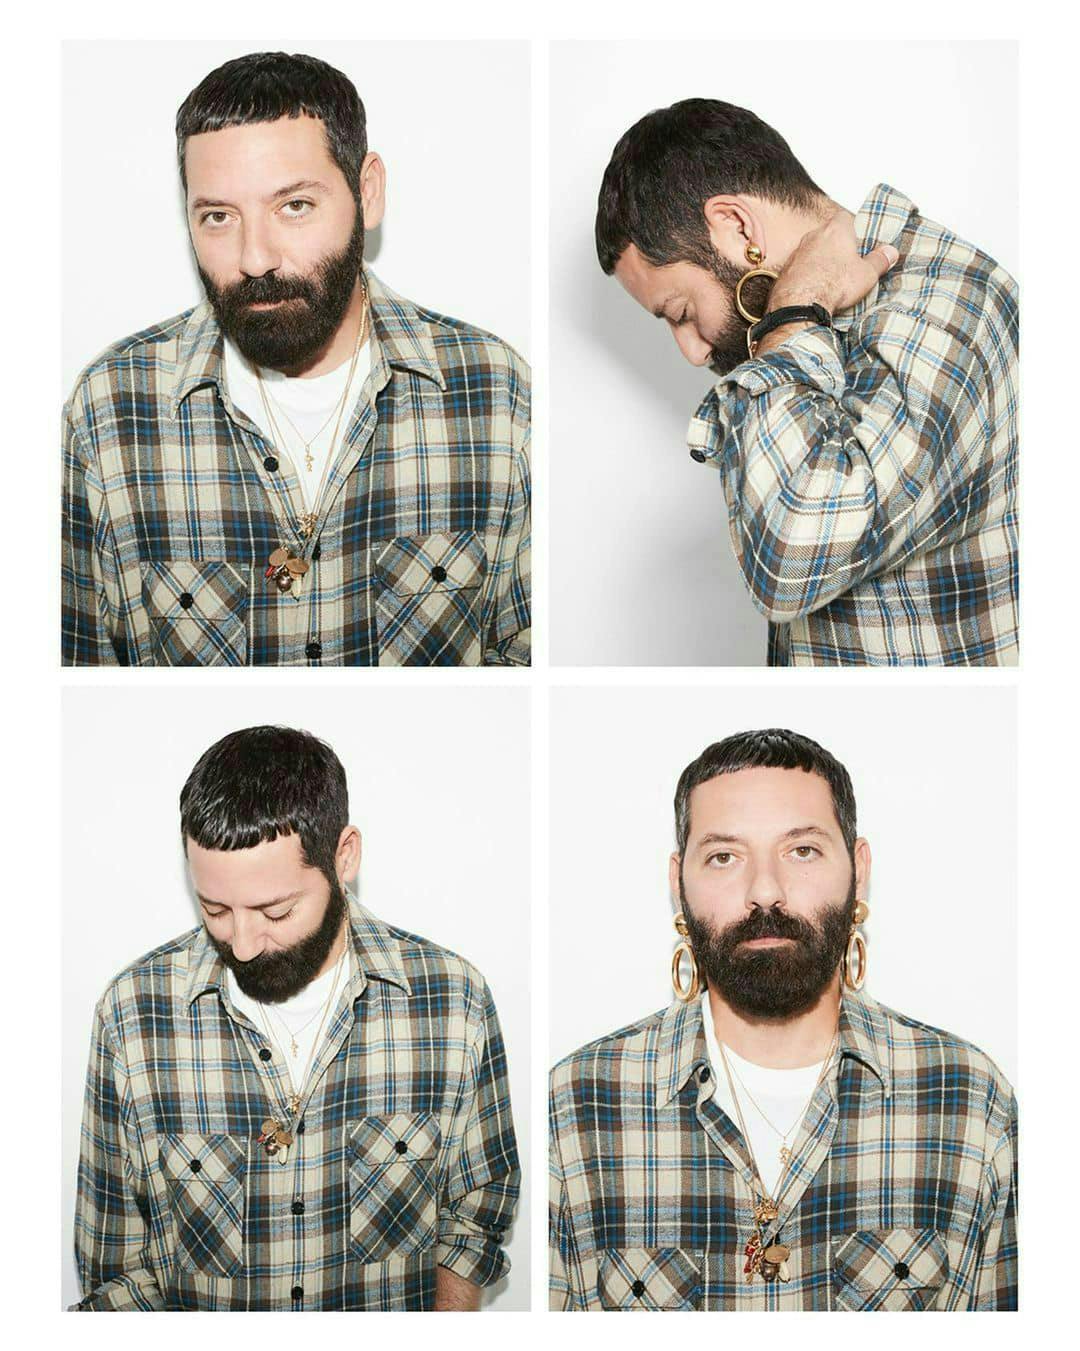 beard face head person clothing shirt adult male man portrait